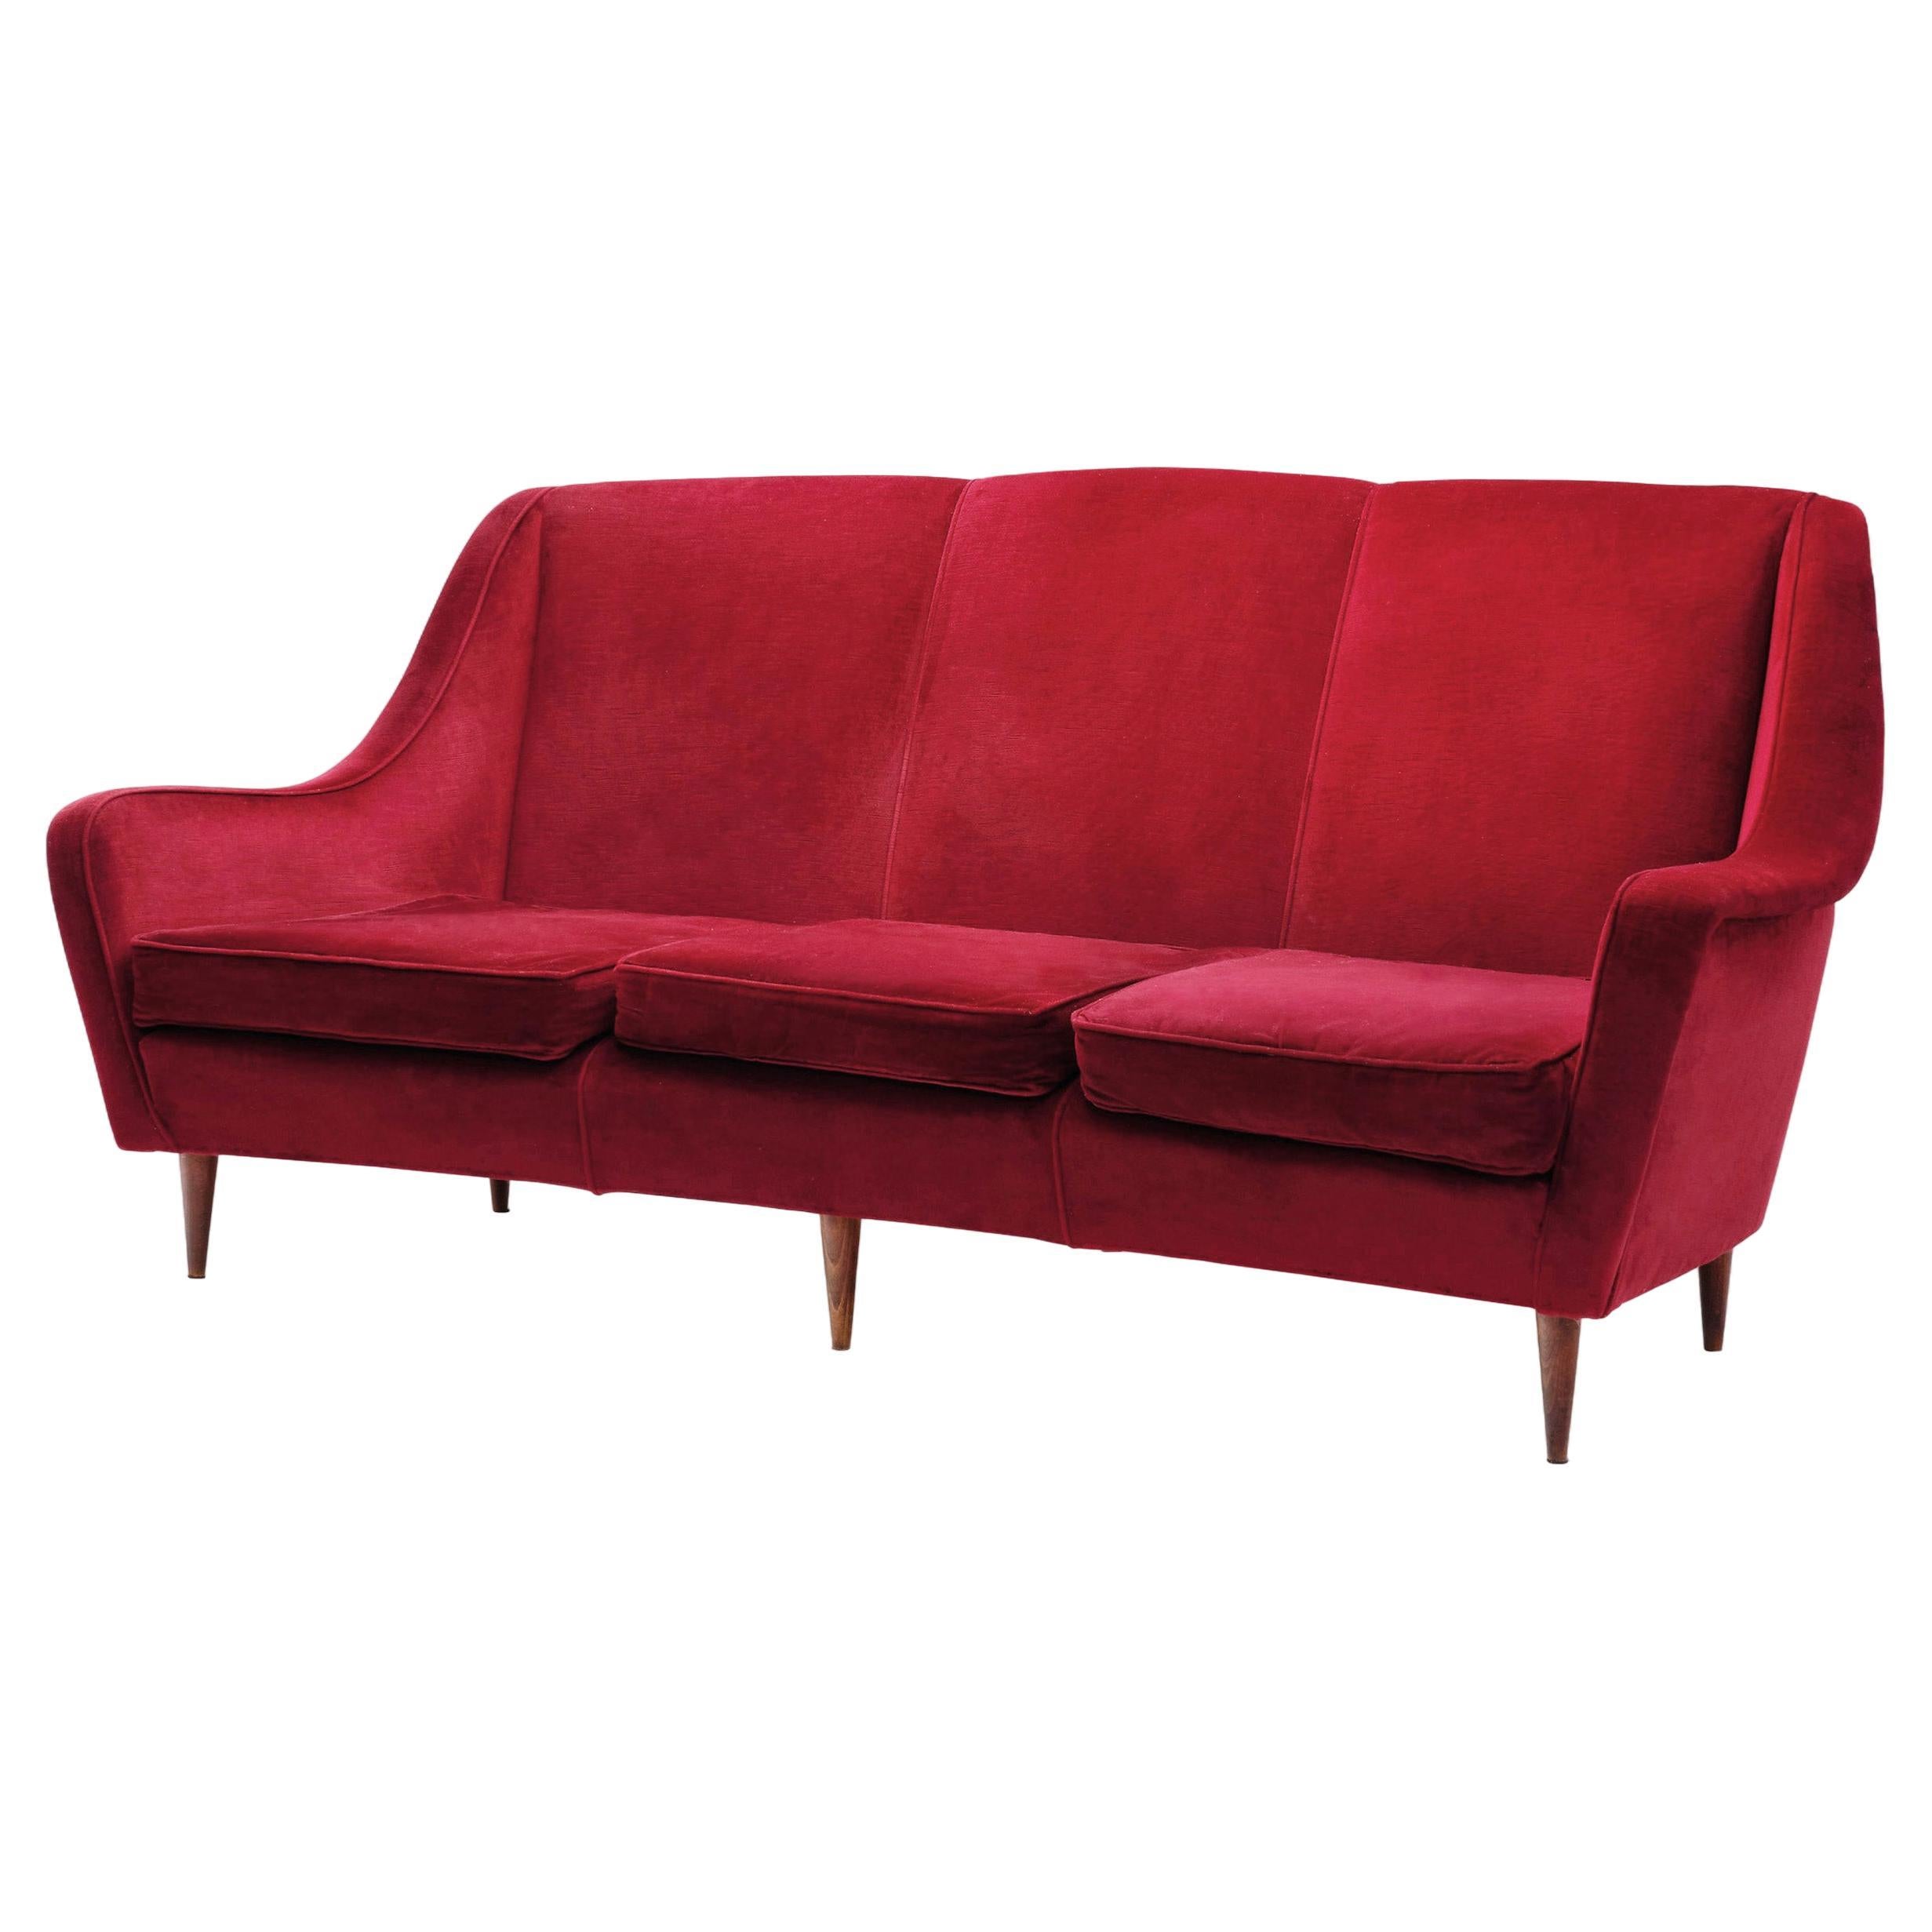 Italian Mid-Century Three-Seater Sofa in Red Velvet, Italy 1950s For Sale